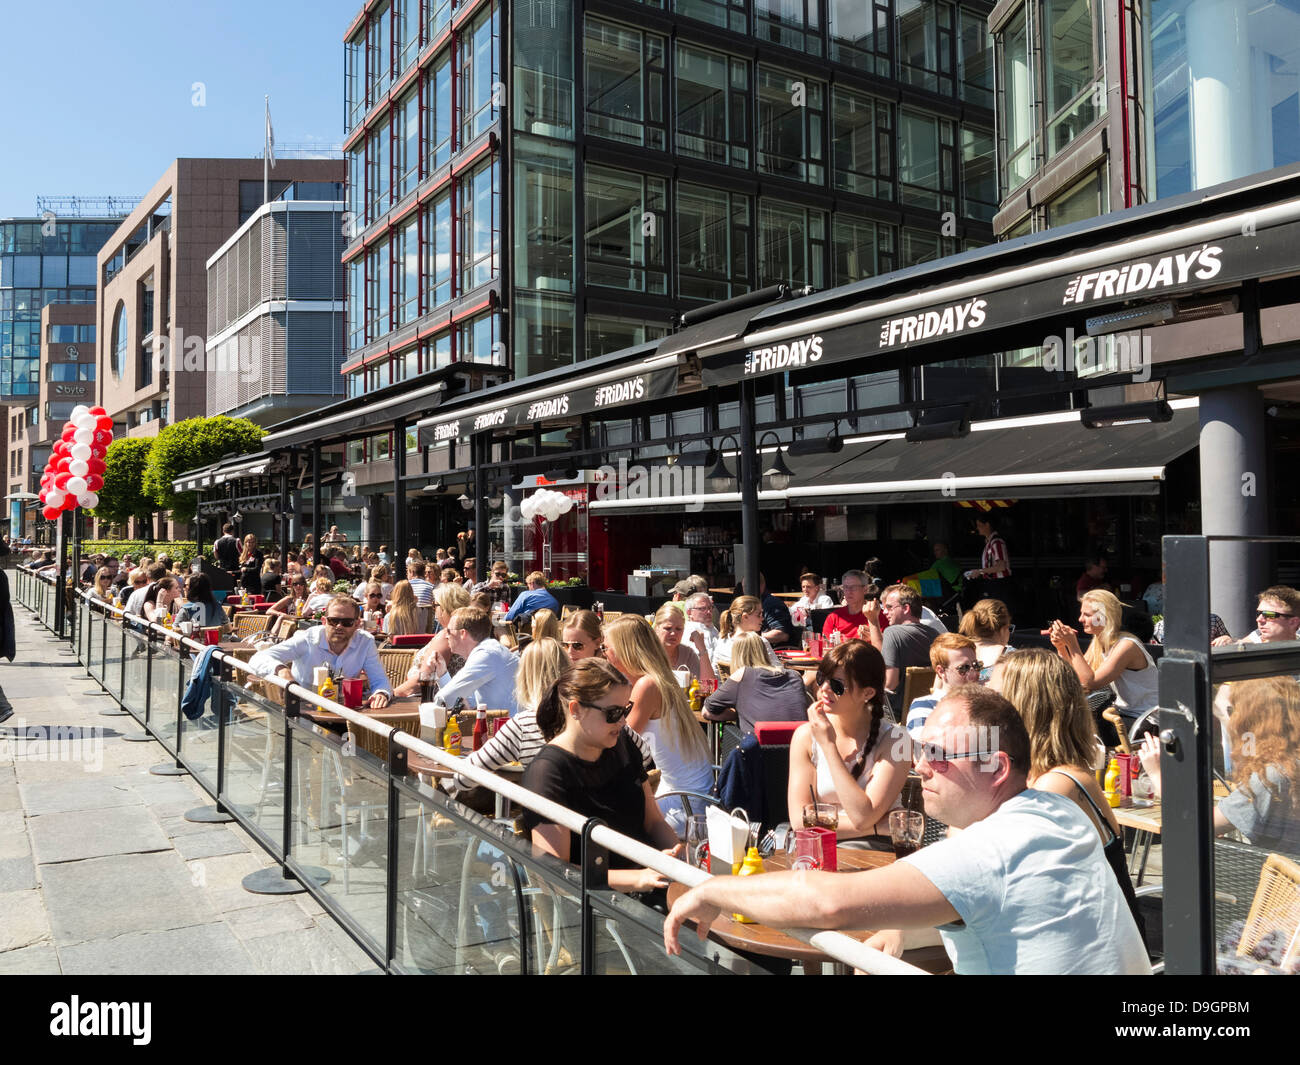 Oslo - TGI Fridays bar cafe restaurants along the waterfront at Oslo Harbor, Norway, Europe Stock Photo